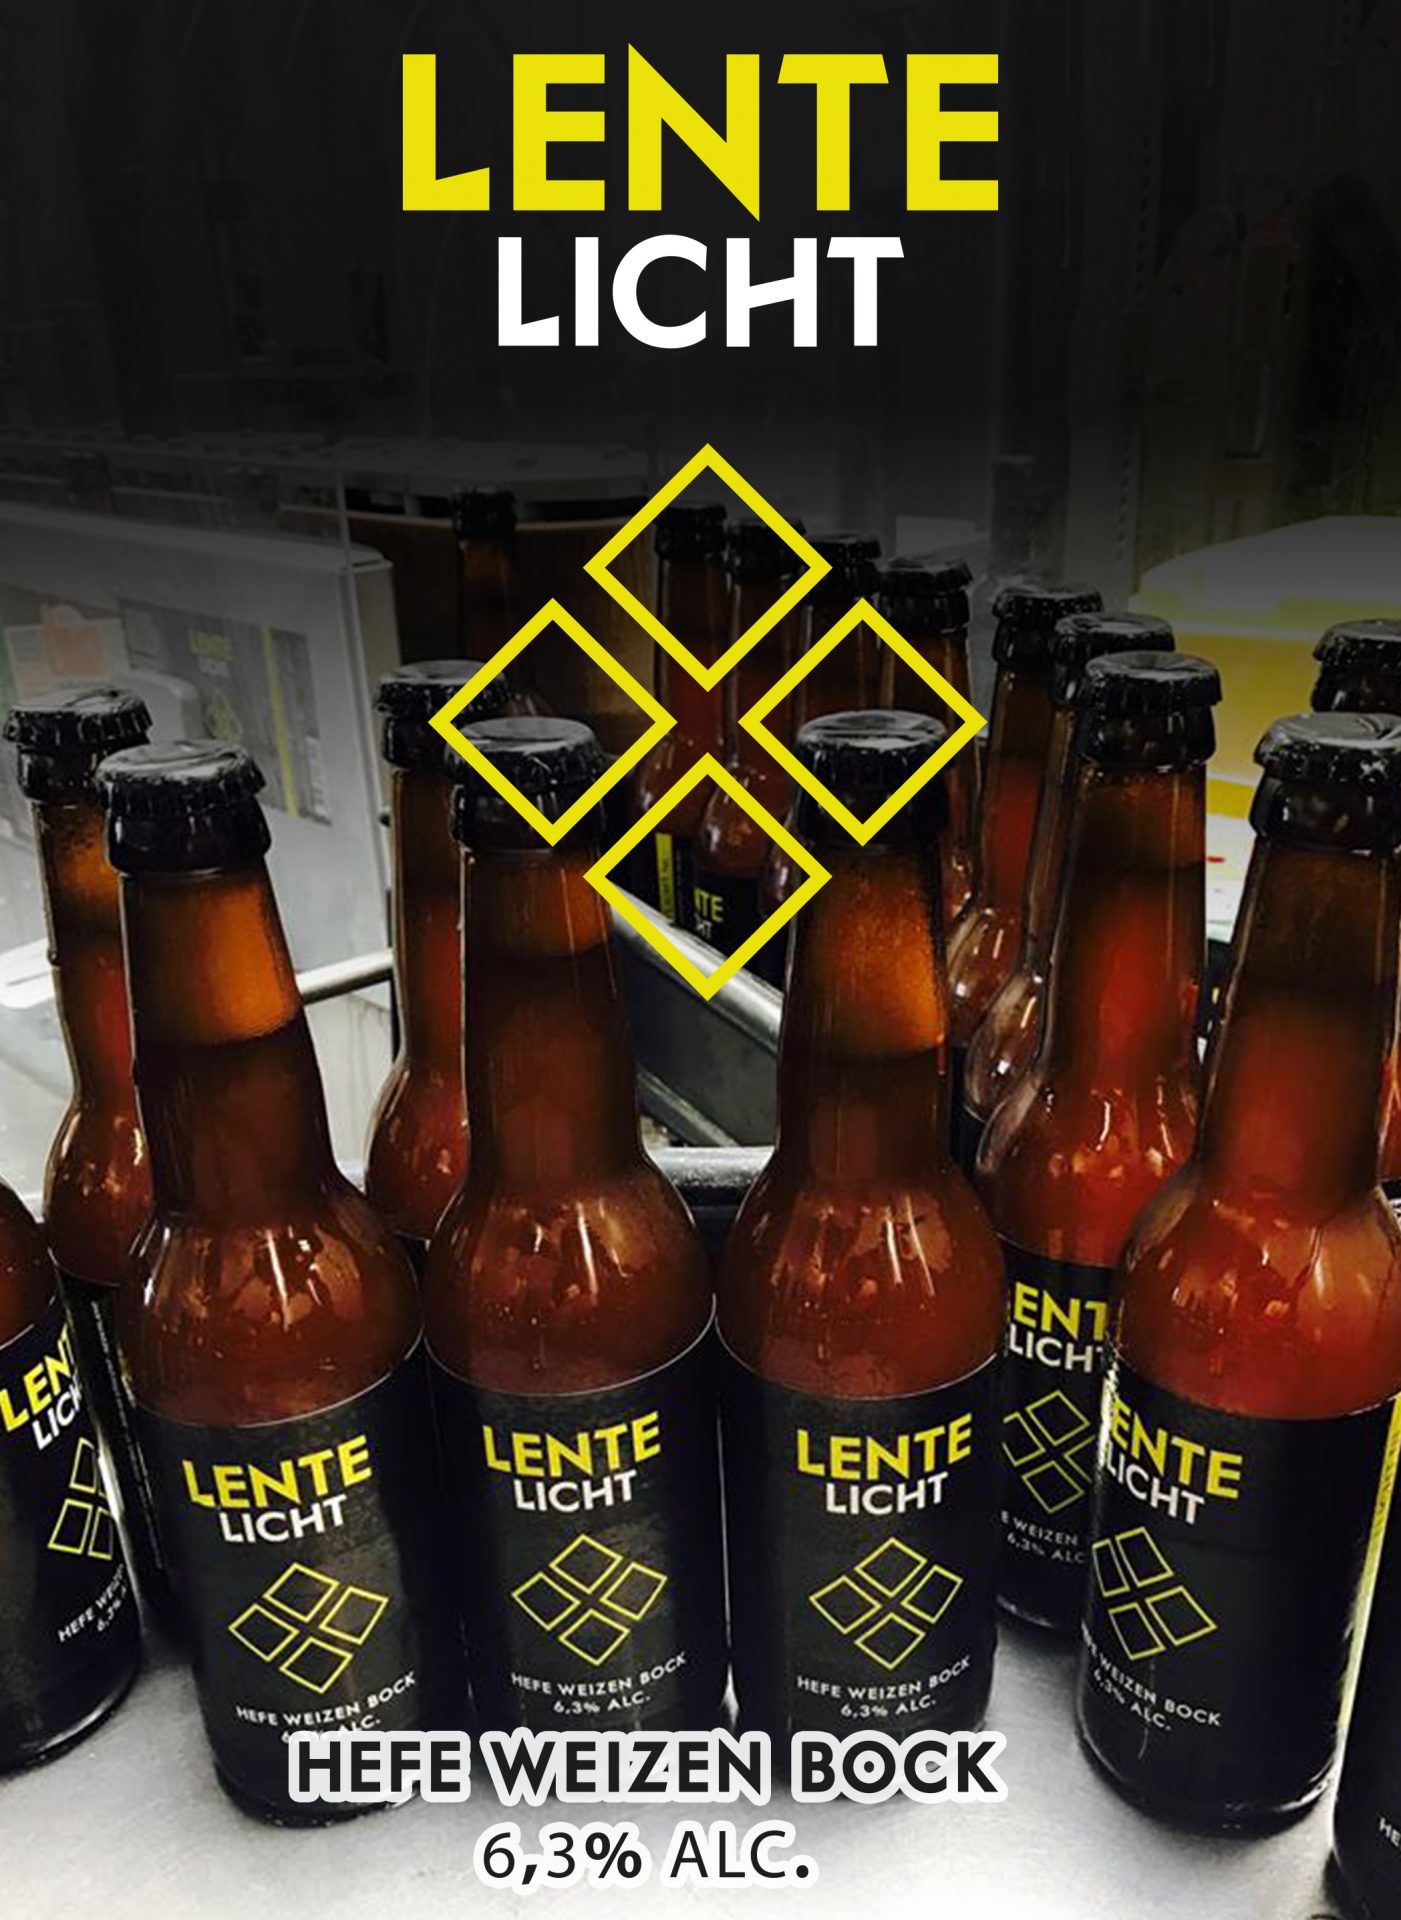 Nieuwsbrief-Nectar-Utrecht-Lentebier-Het-Licht-Lentelicht